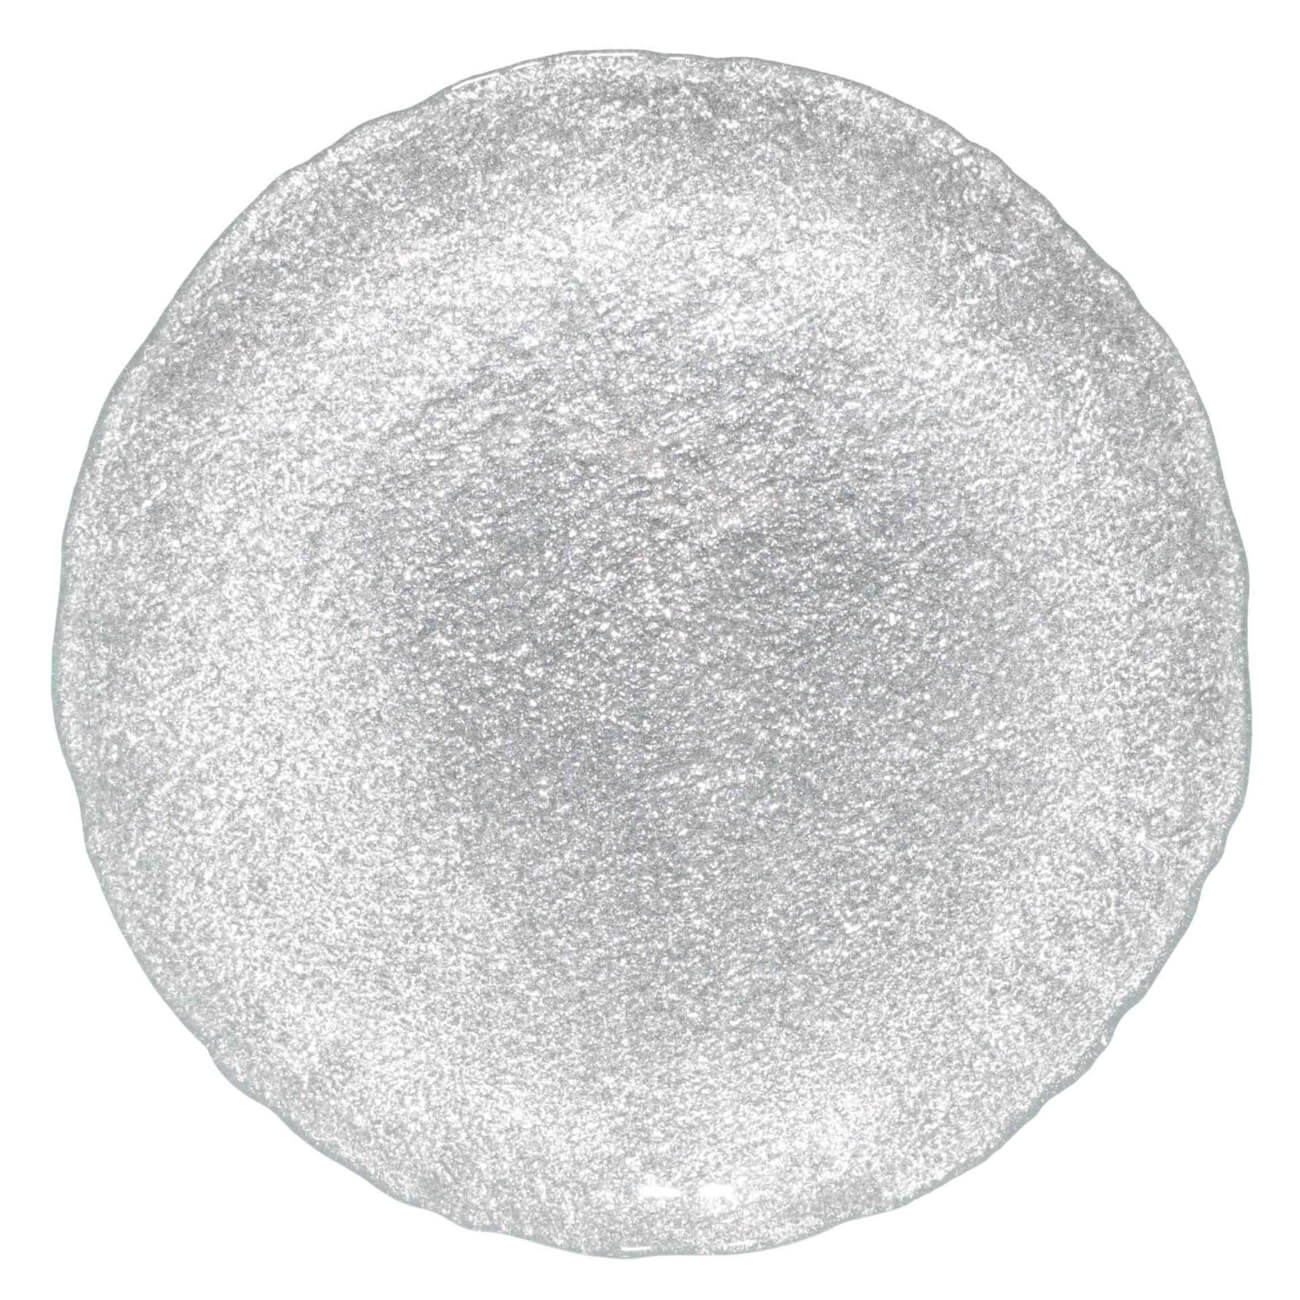 Тарелка обеденная, 27 см, стекло, серебристая, Antares